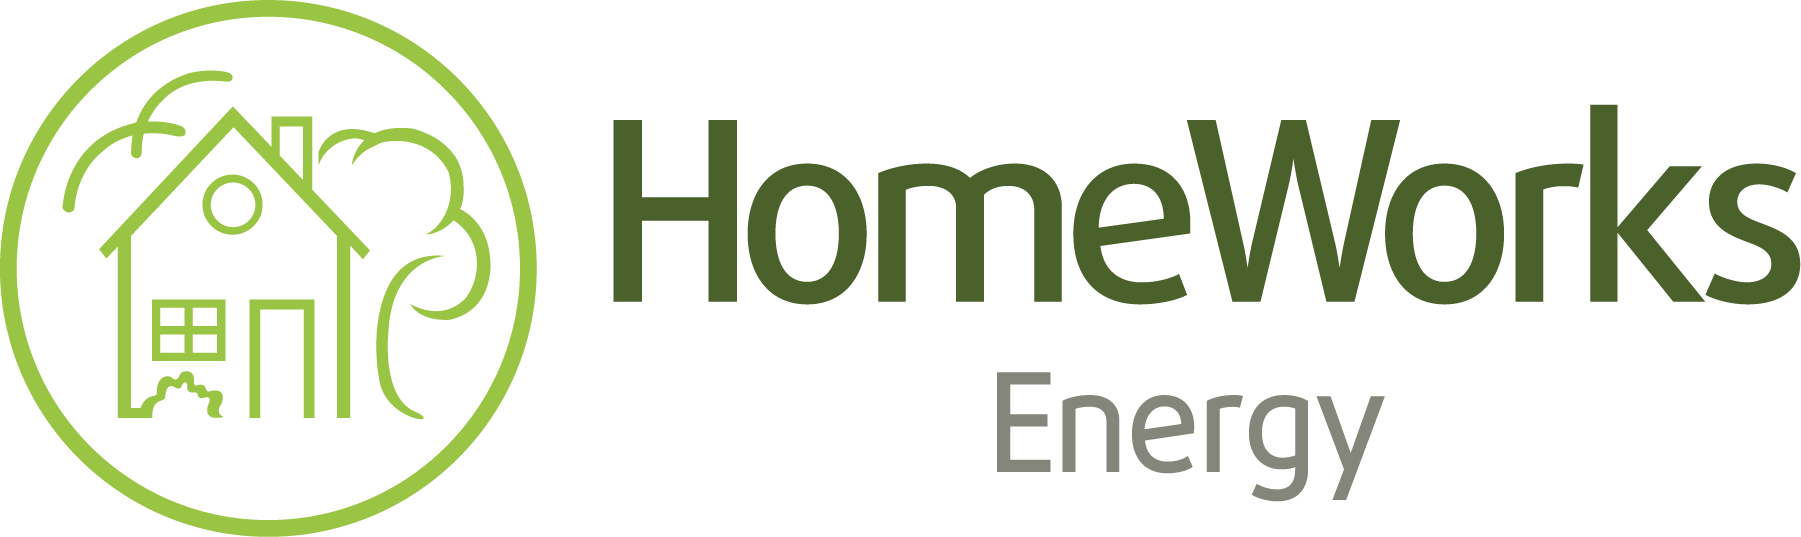 cindy nash homeworks energy